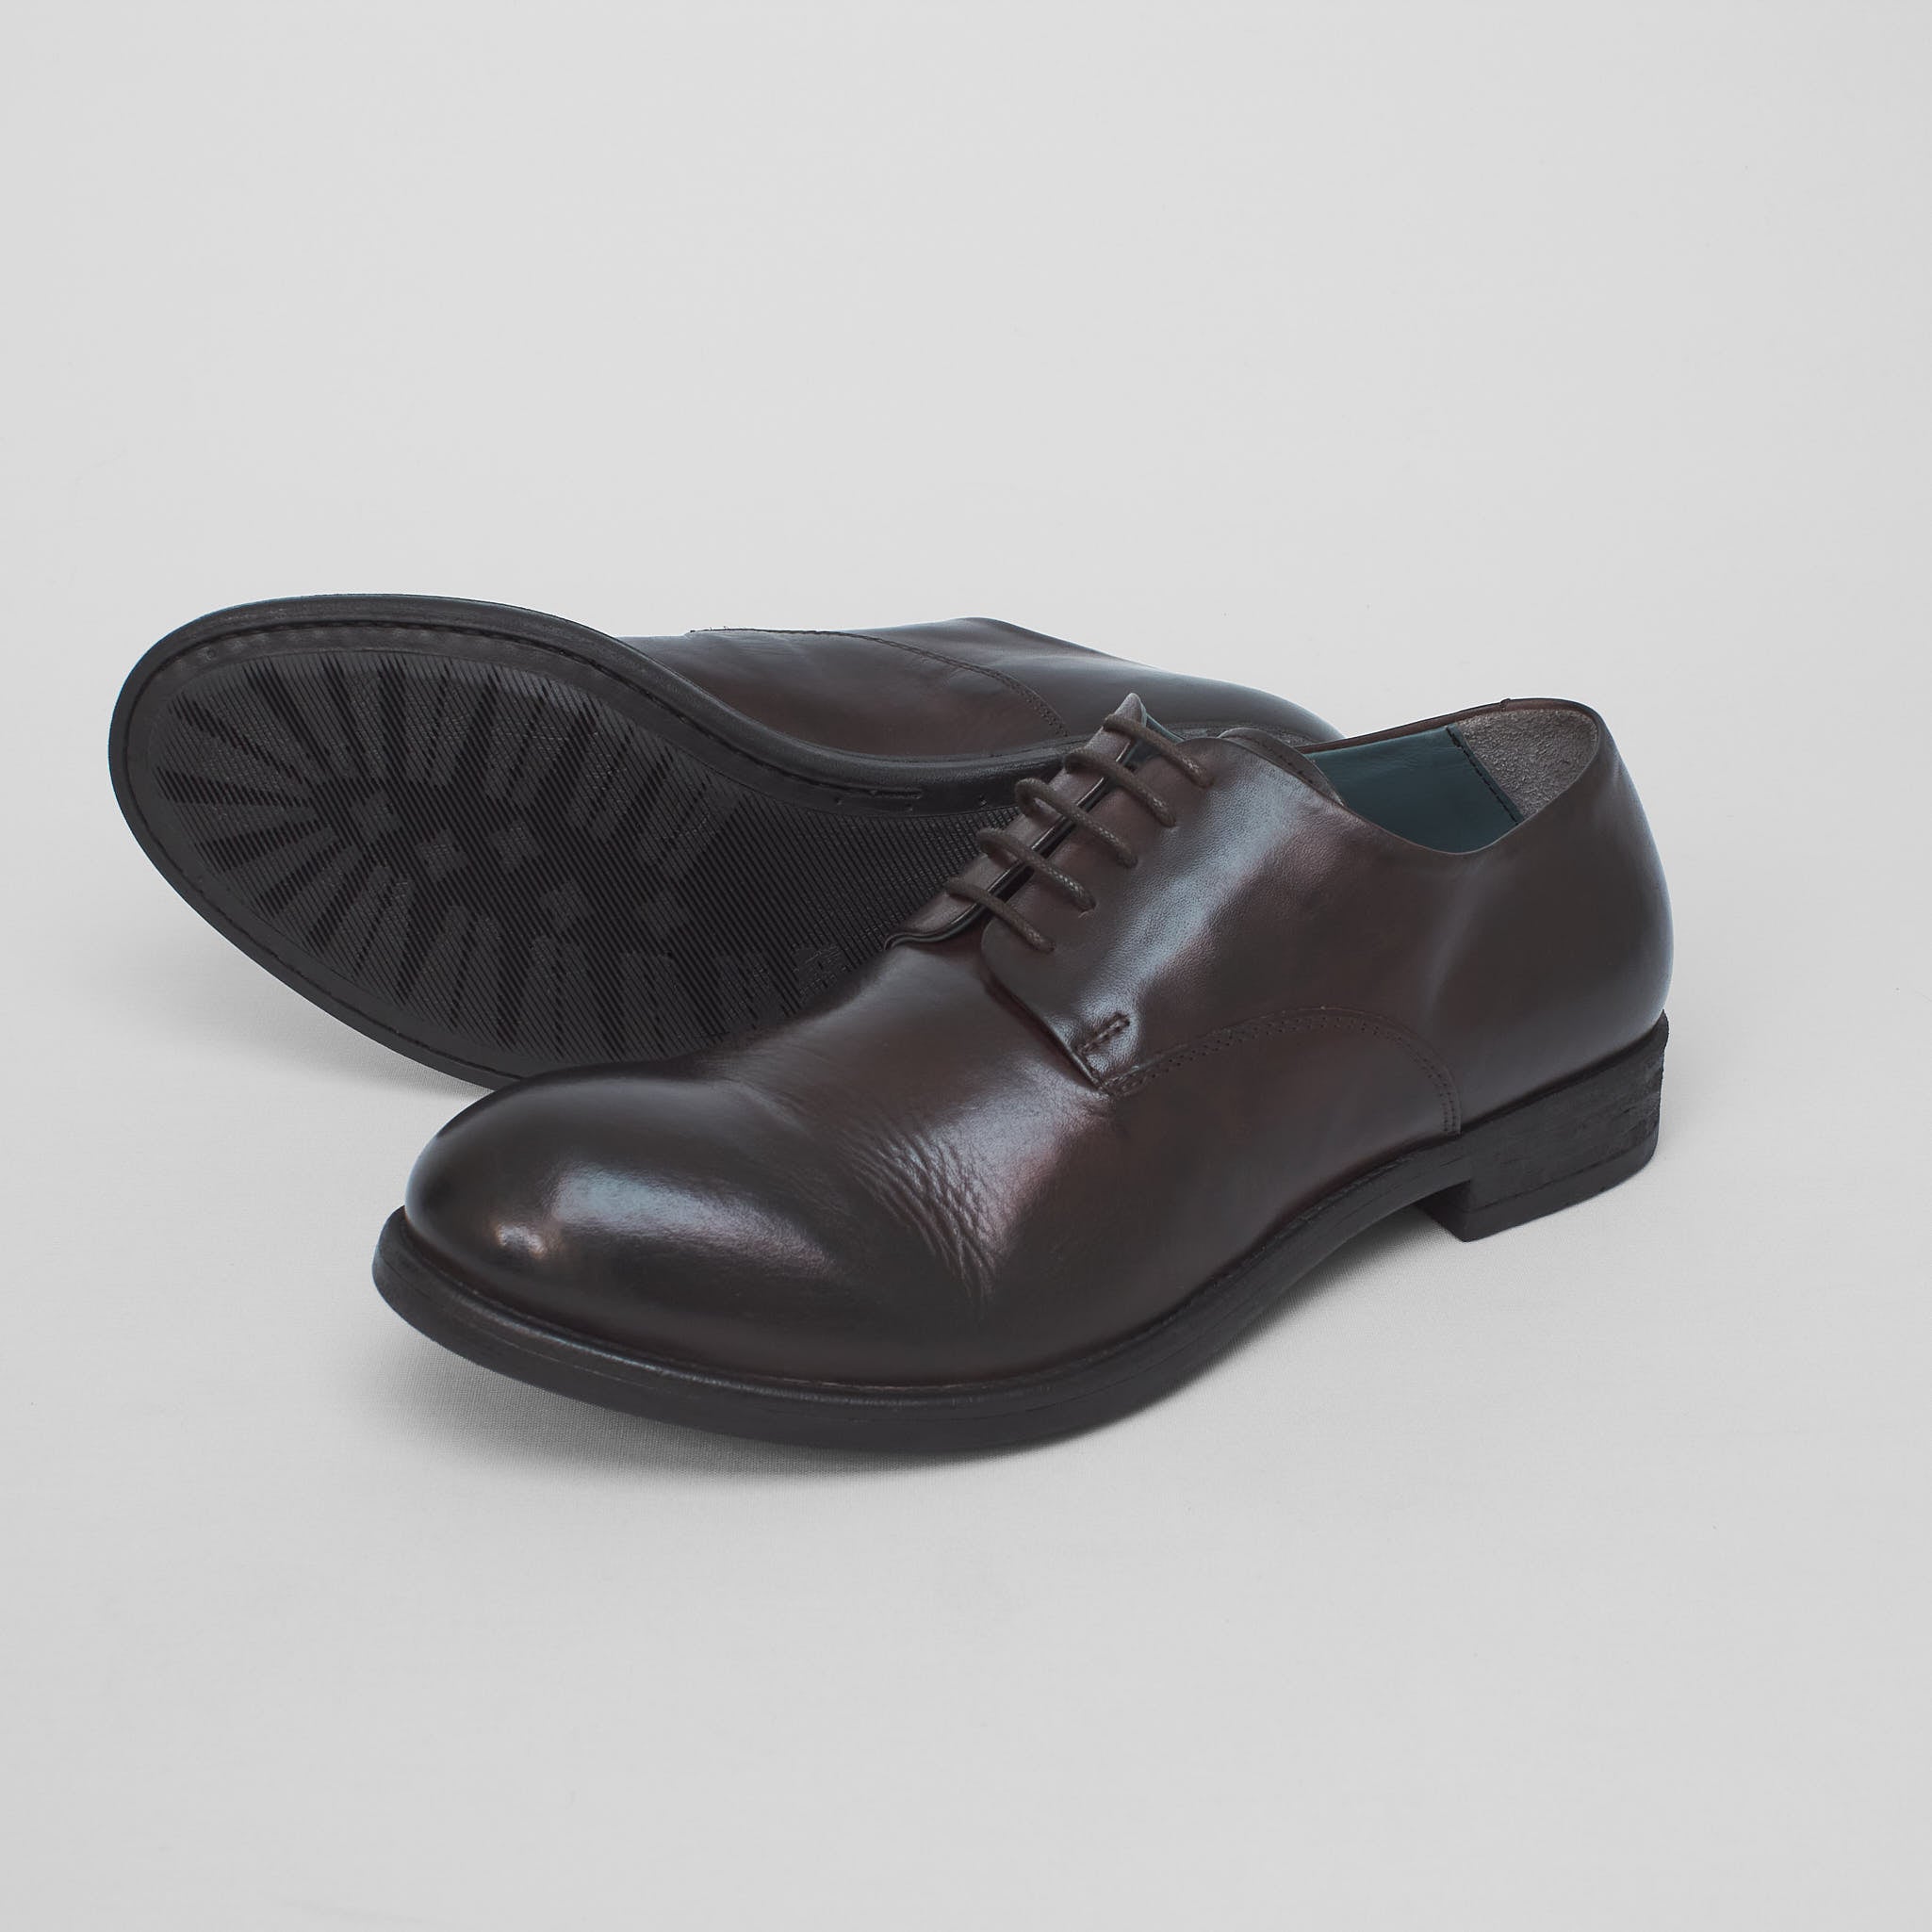 Crispiniano Firenze Plain Blucher Shoes - DeeCee style